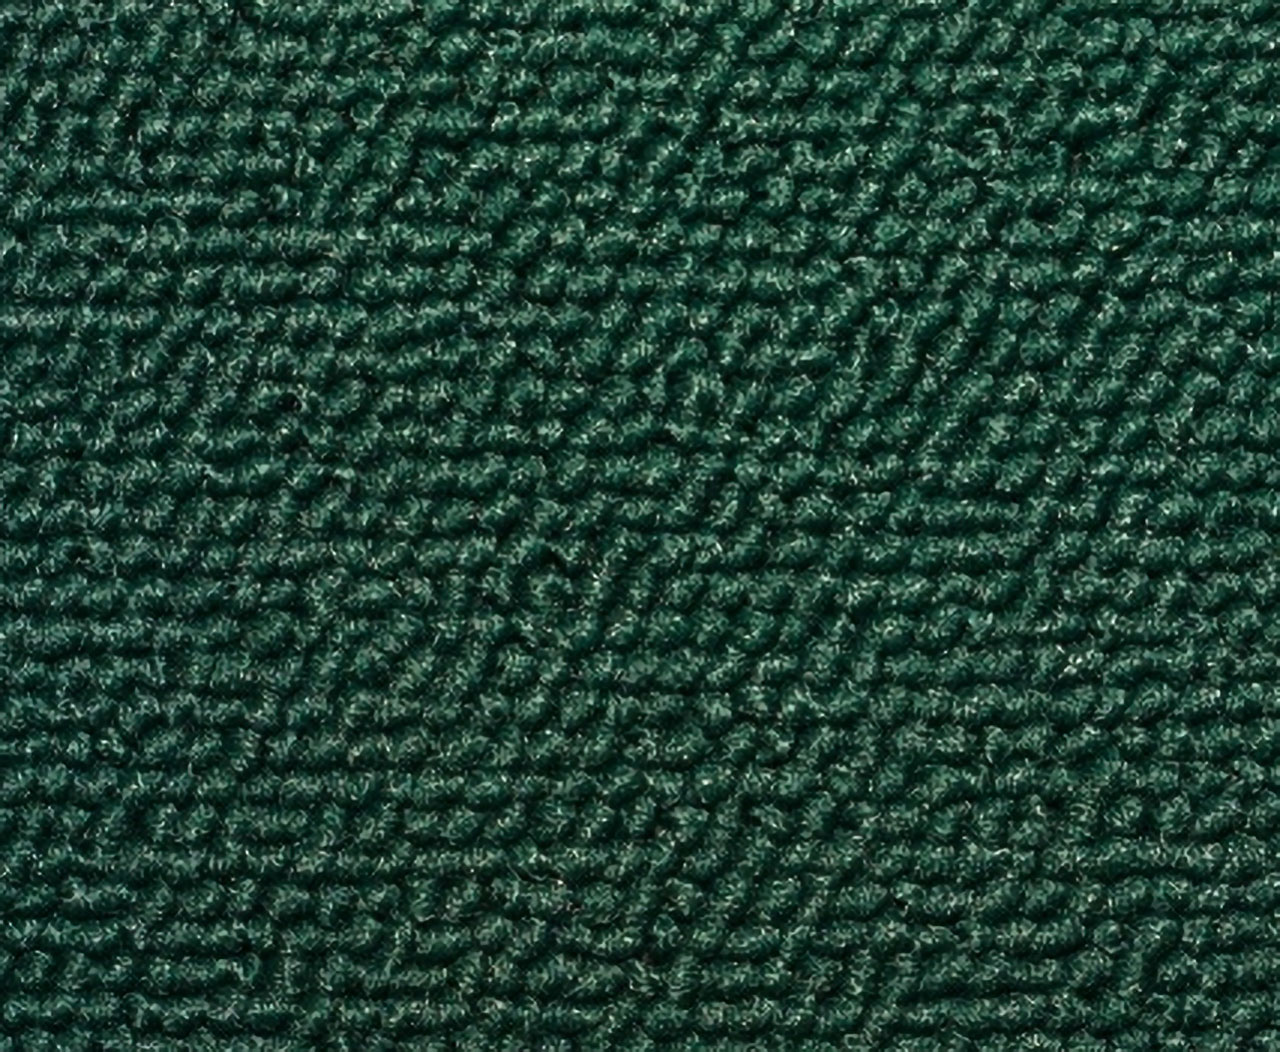 Holden Standard EH Standard Panel Van C52 Palais Green Carpet (Image 1 of 1)